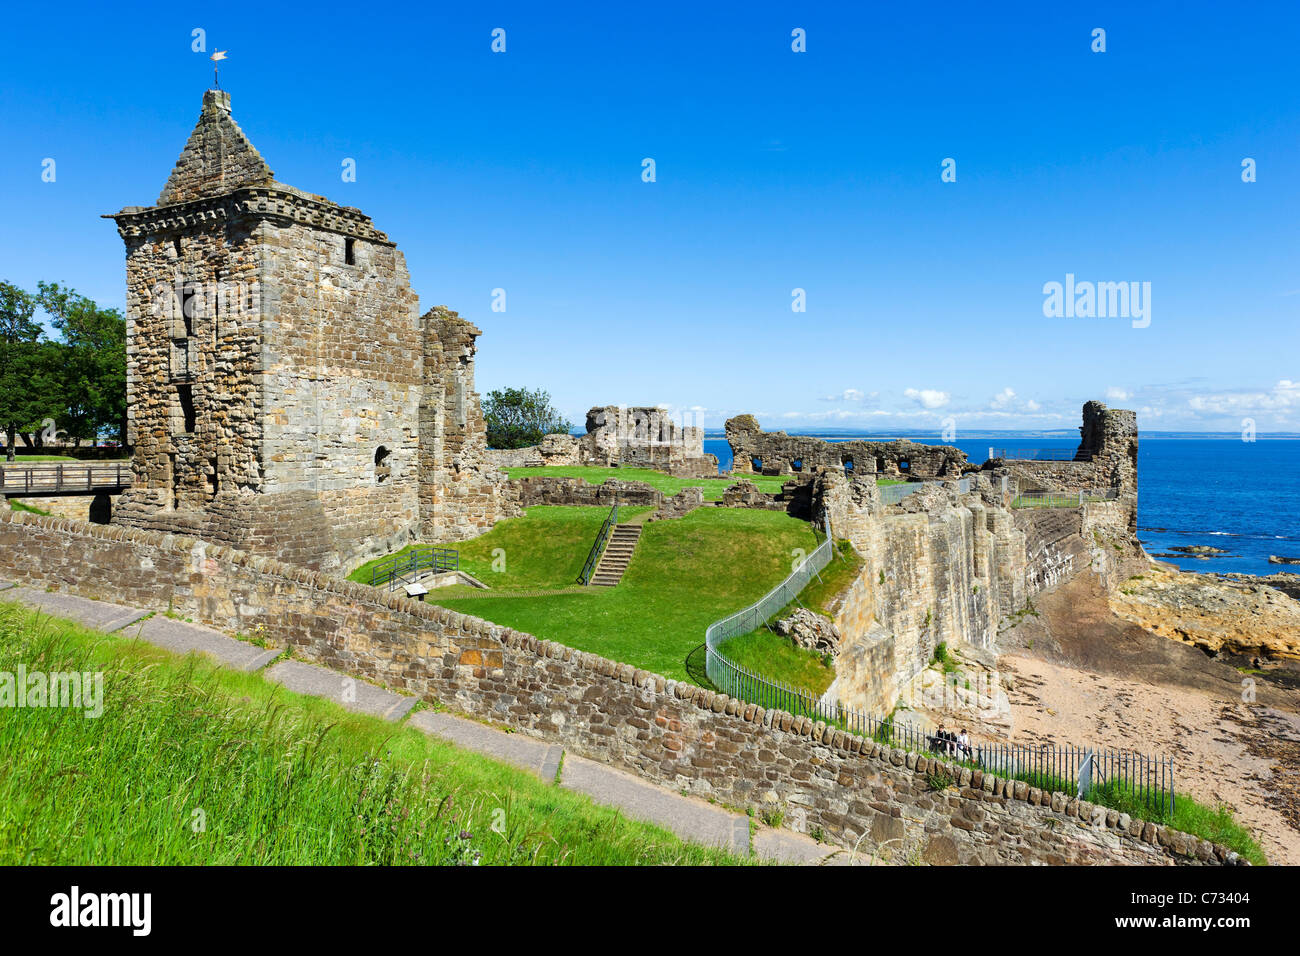 Ruins of St Andrews Castle, St Andrews, Fife, Central Scotland, UK. Scottish castles. Stock Photo